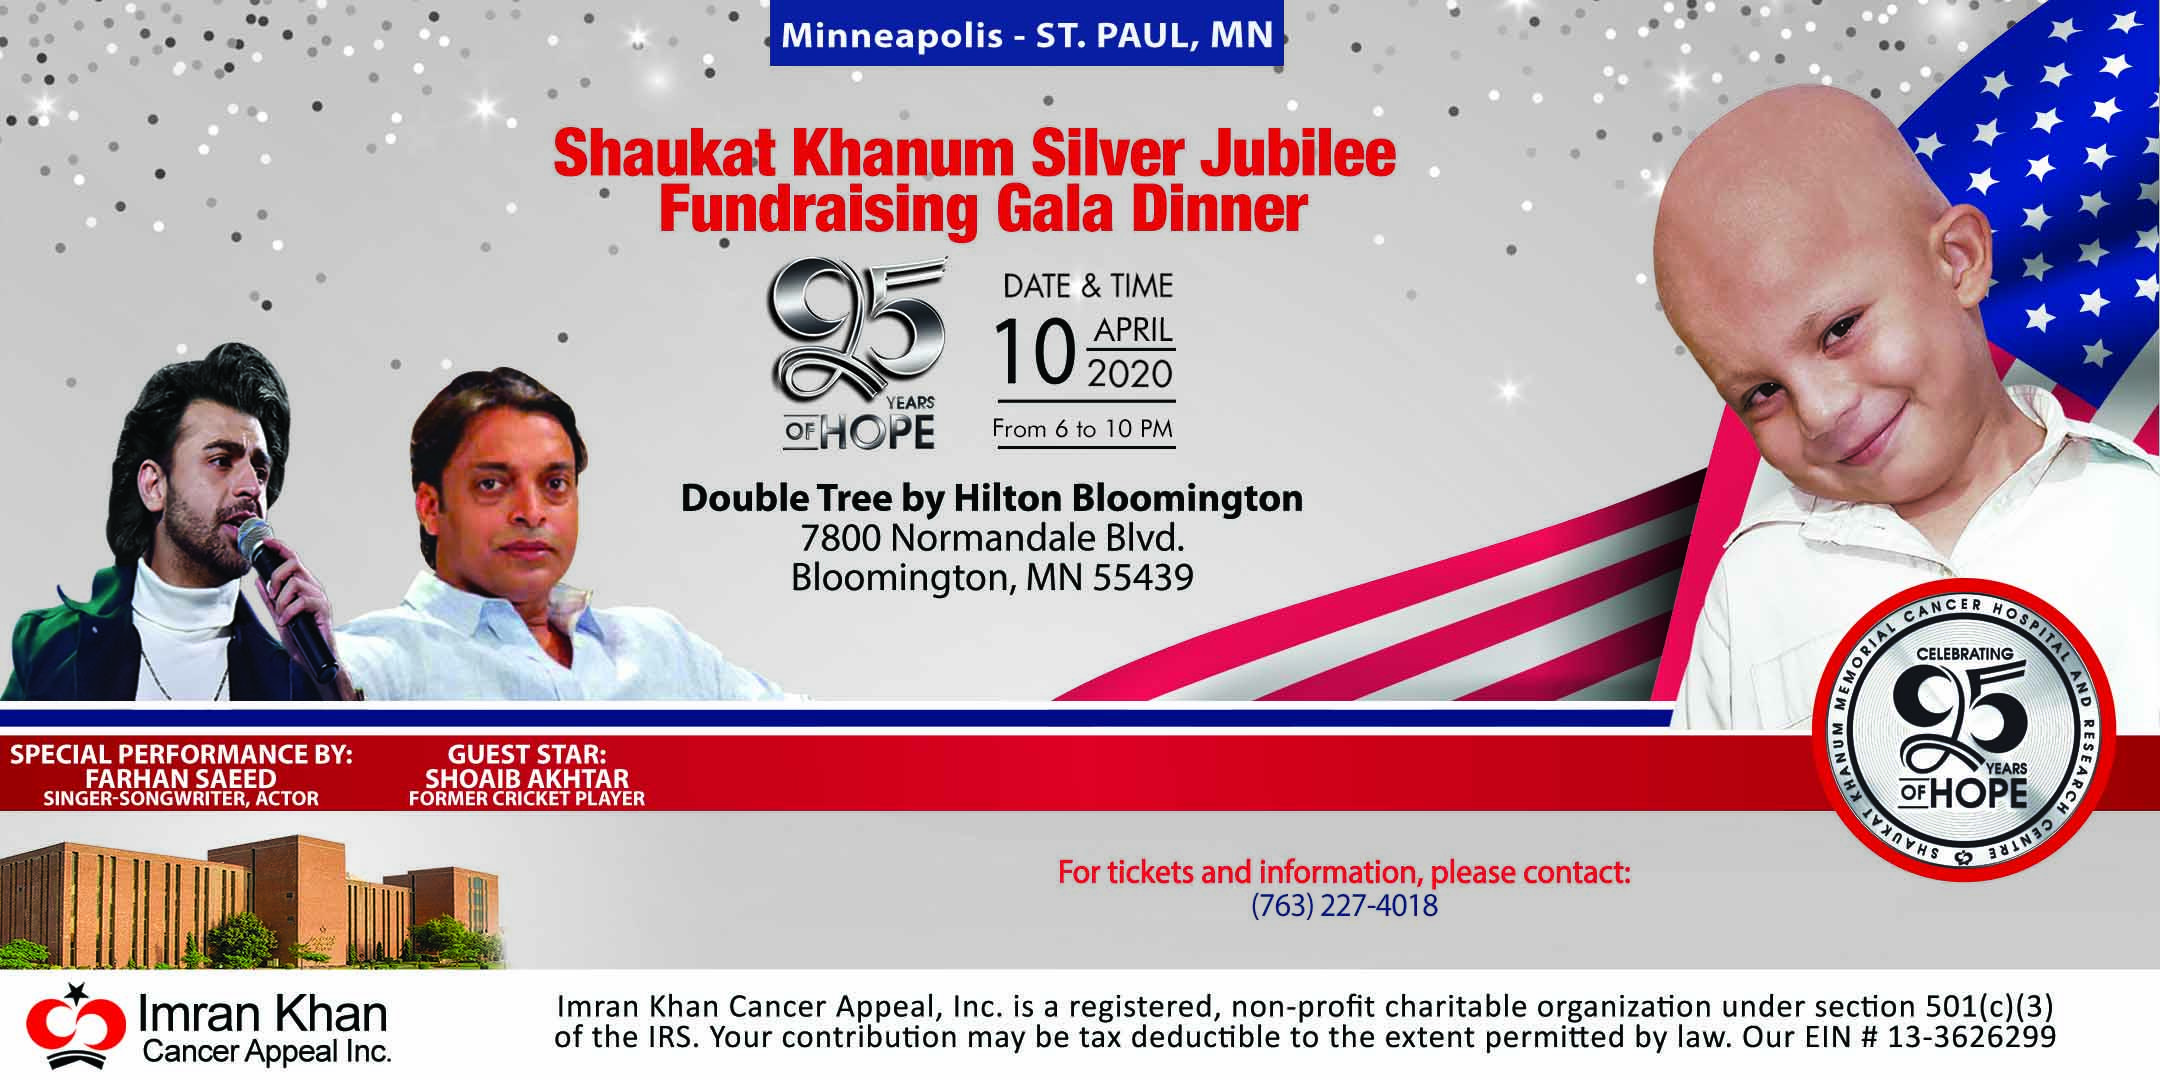 Fundraising Gala Dinner in Minneapolis